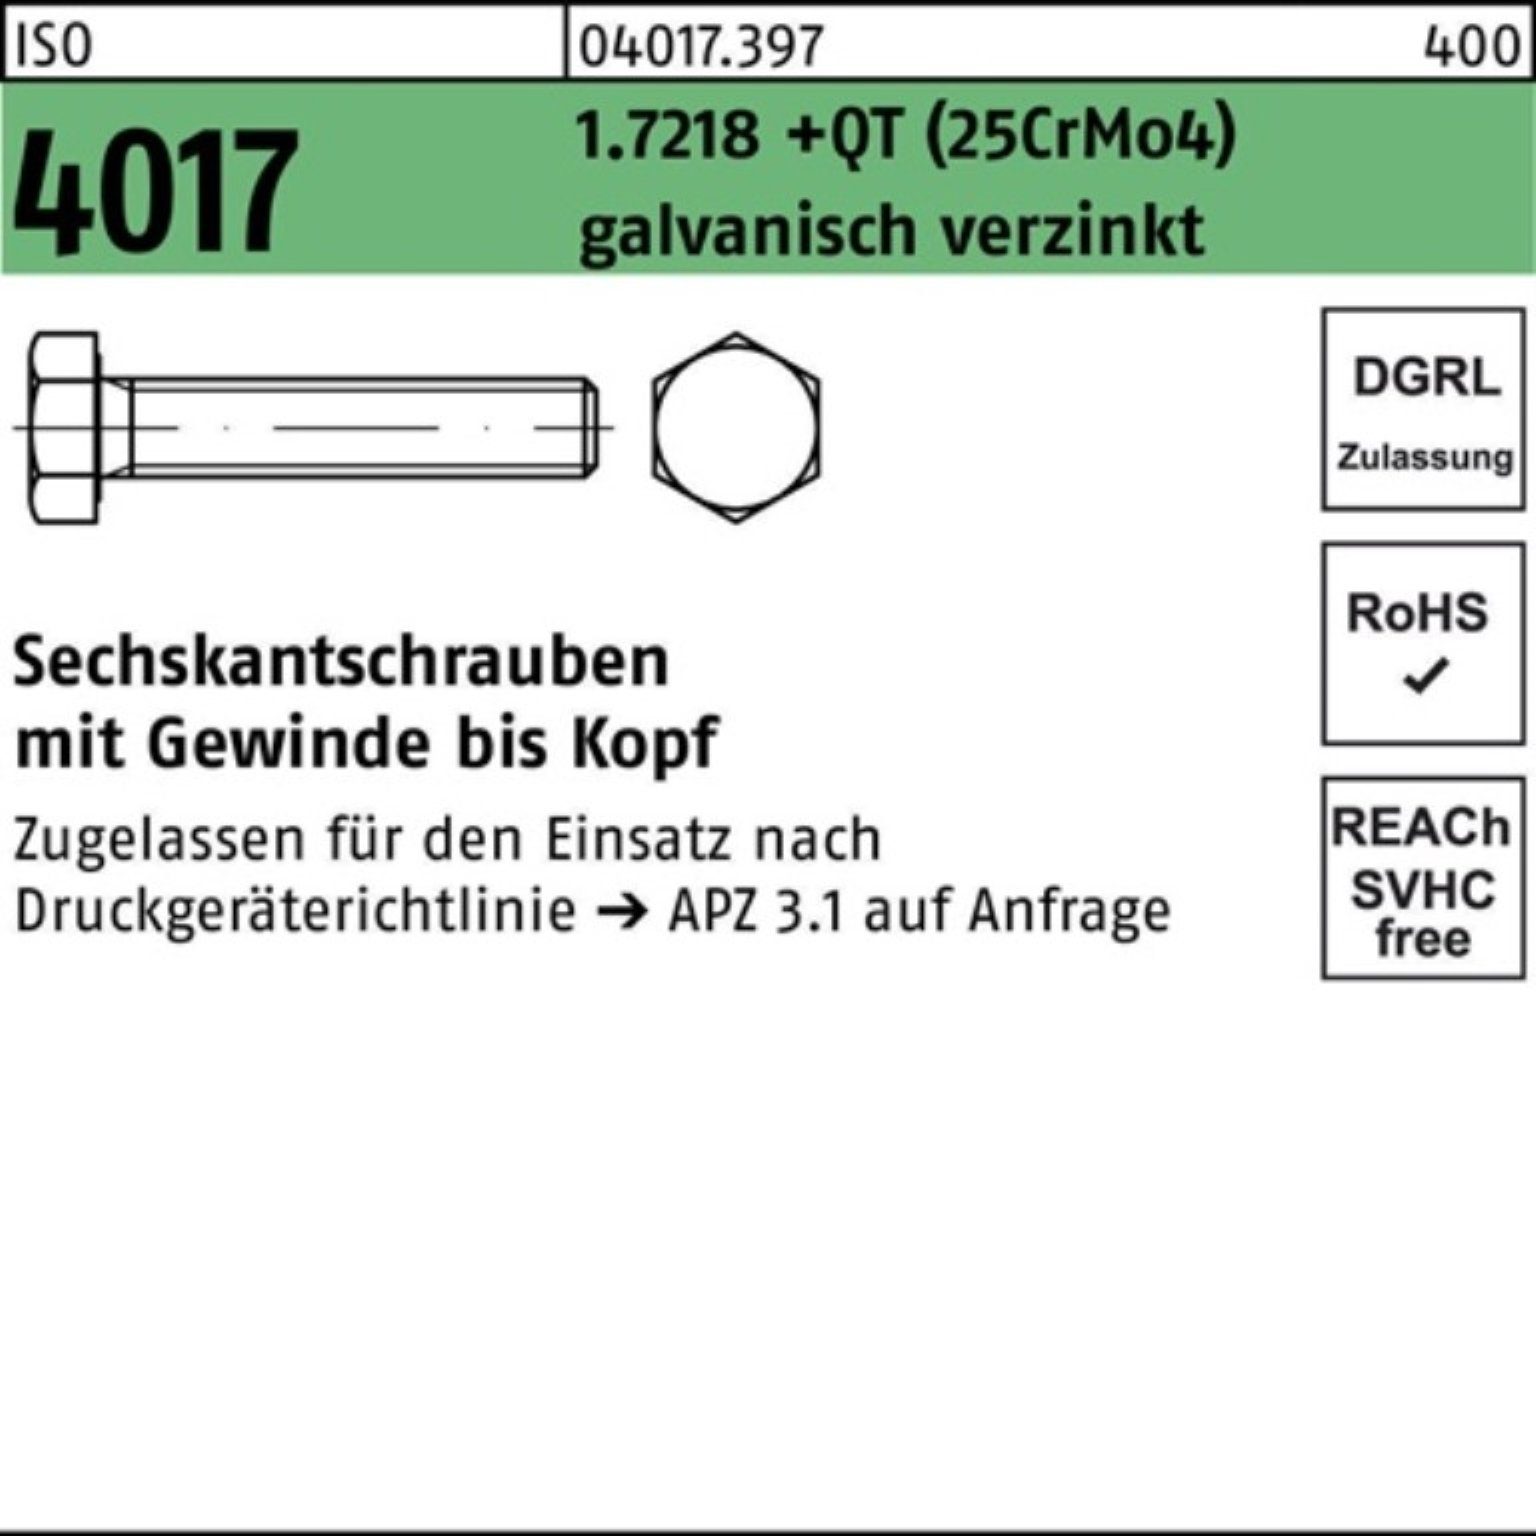 Pack Sechskantschraube VG ISO 1.7218 100er M16x120 +QT Sechskantschraube Bufab (25CrMo4) 4017